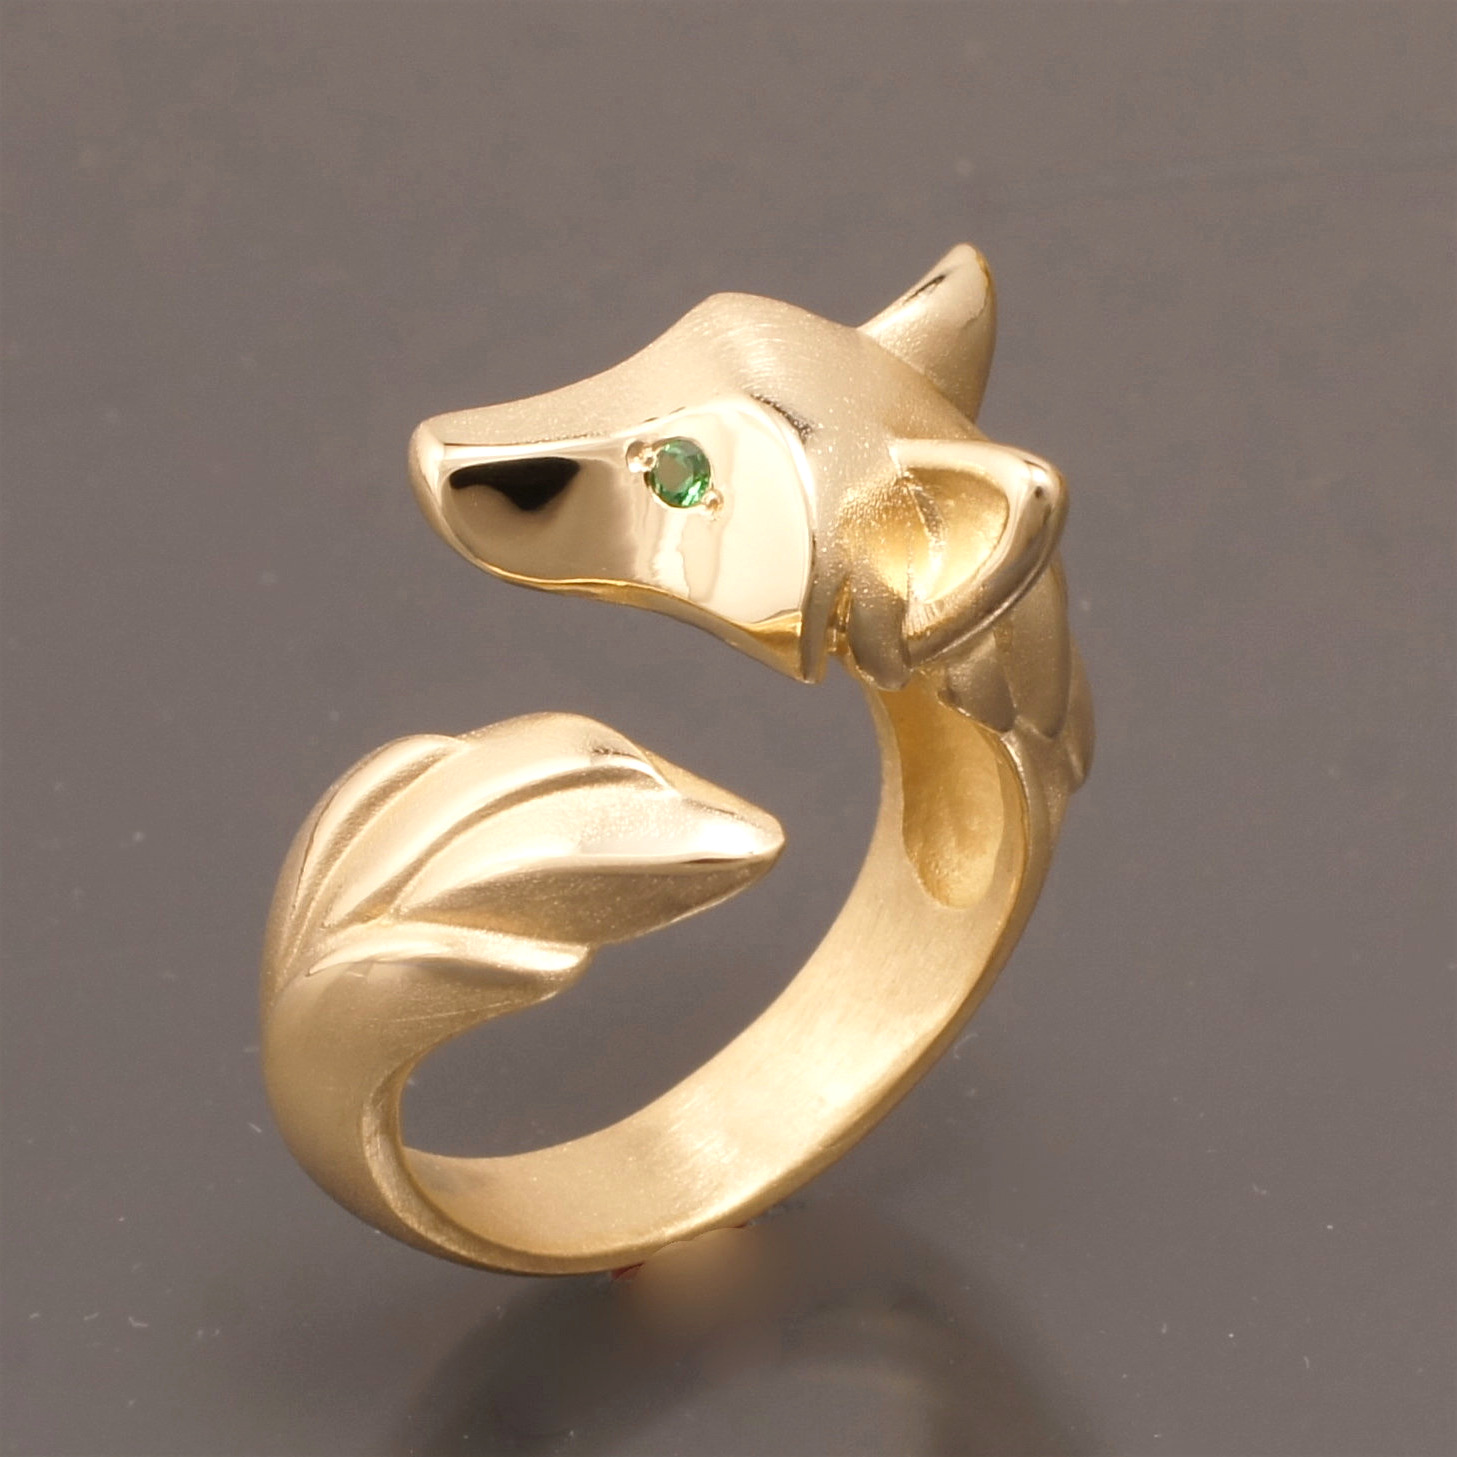 Bronze Fox Ring with Green Diamond Eyes by Michael Tatom